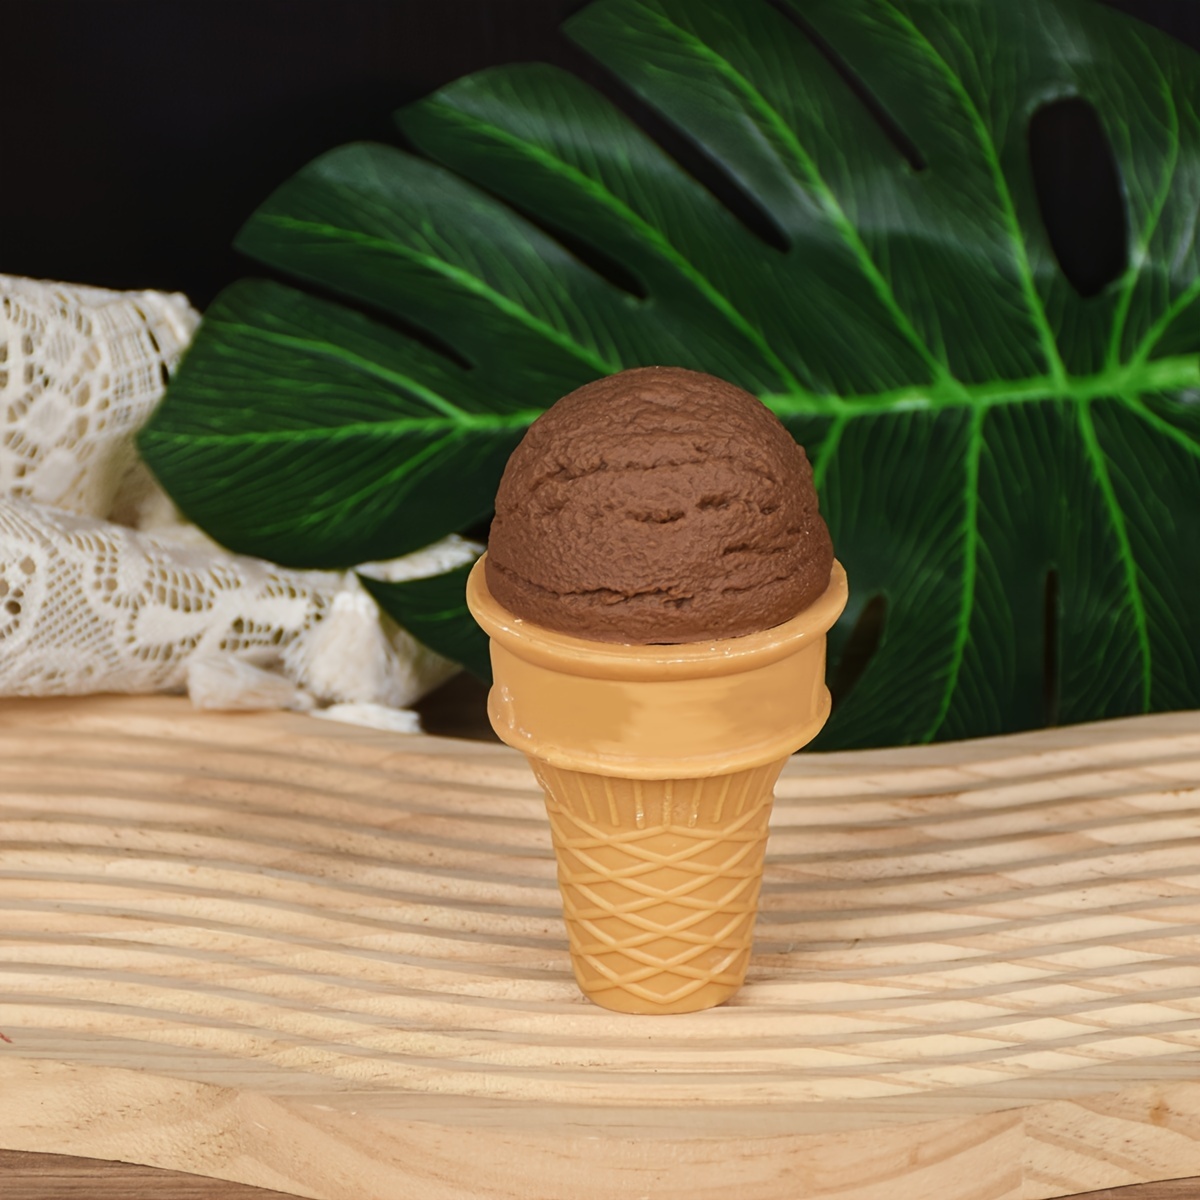 Fake Double Scoop Chocolate Ice Cream on Sugar Cone